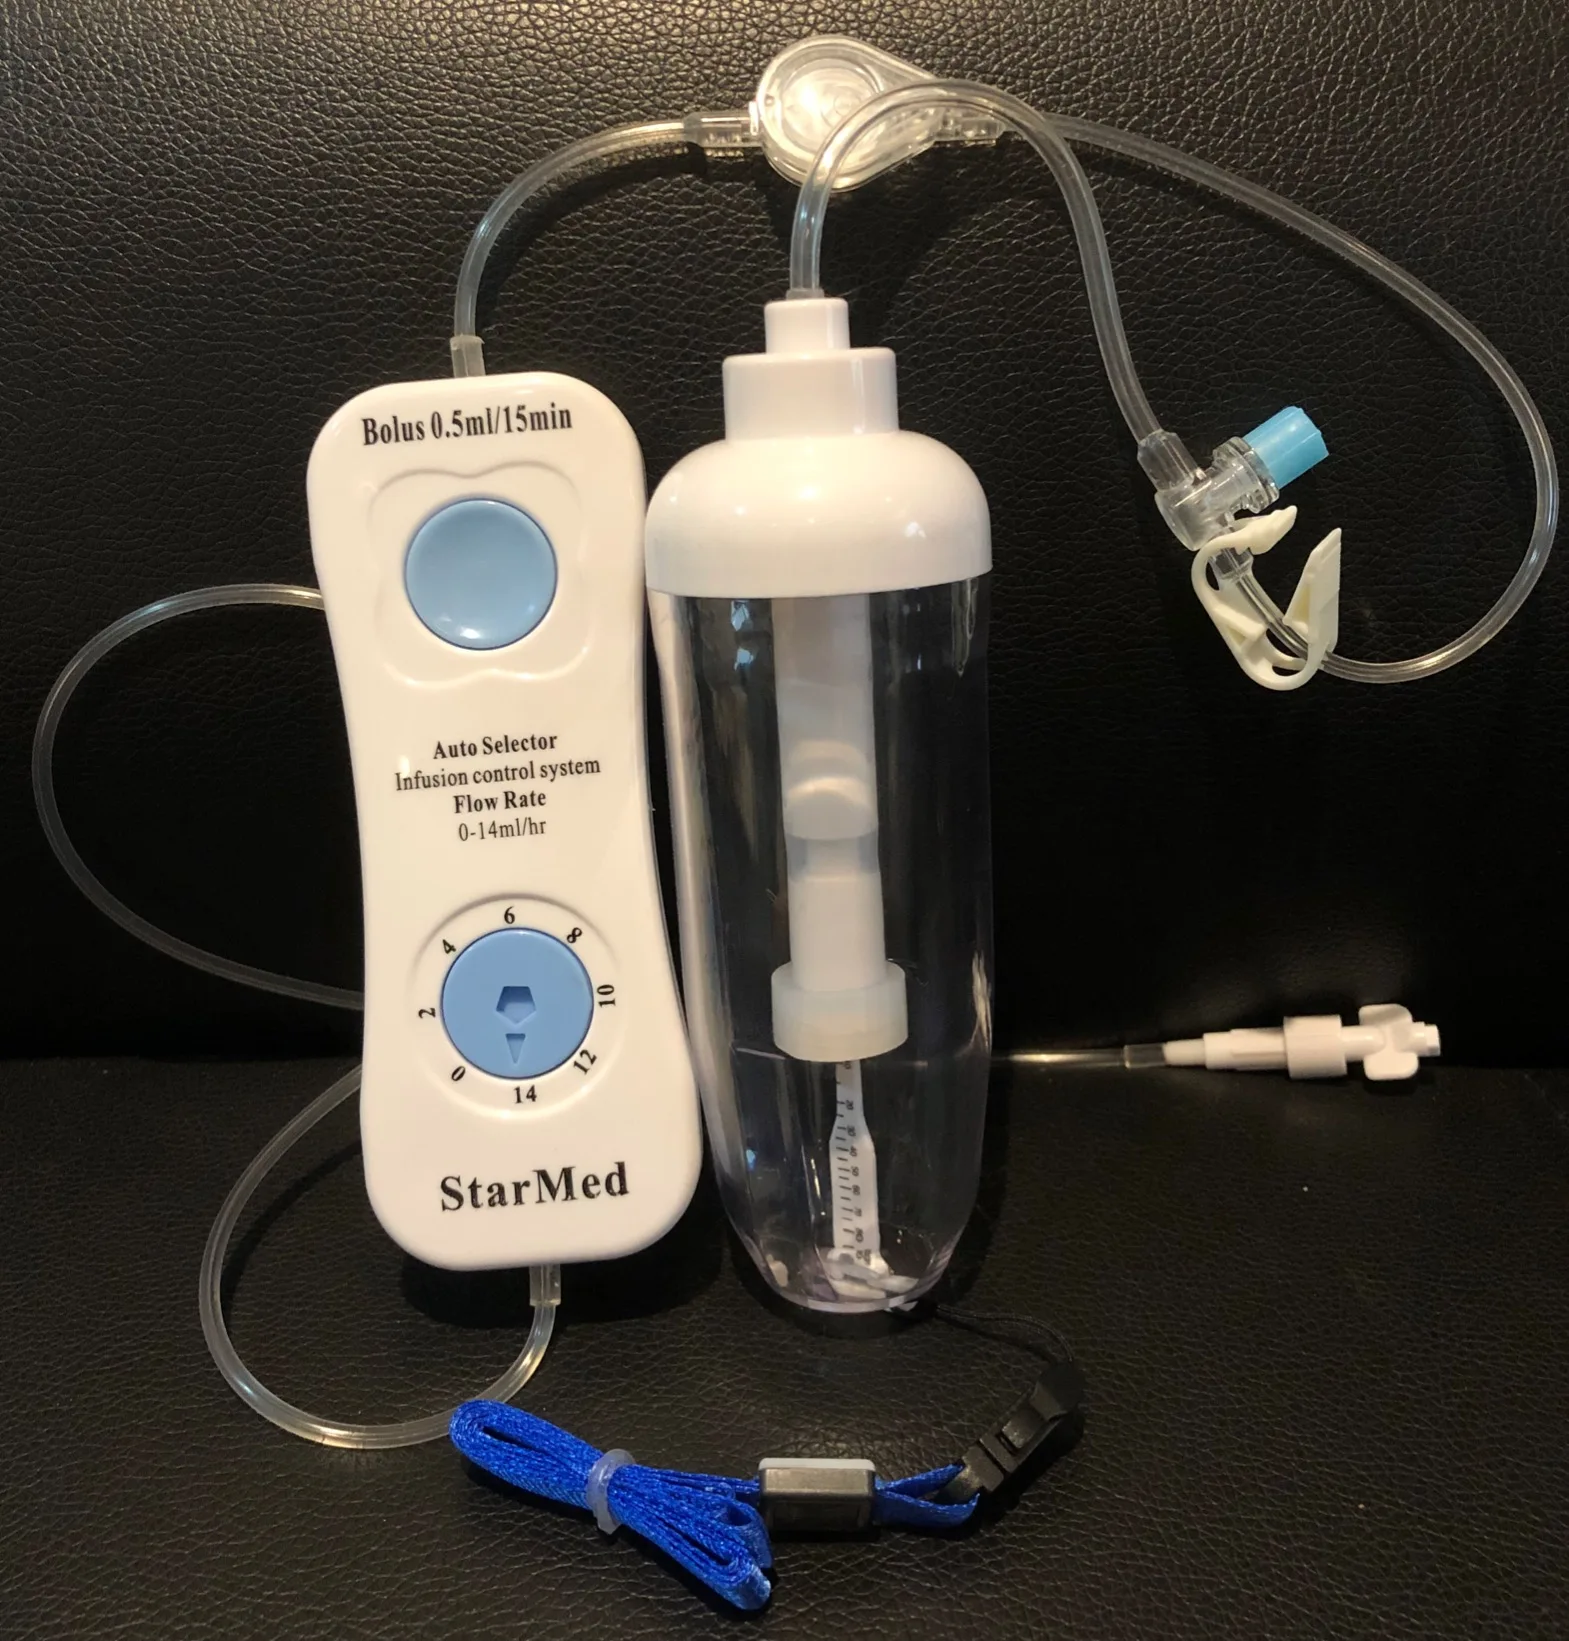 
2020 Multi-frenquecy infusion pump 